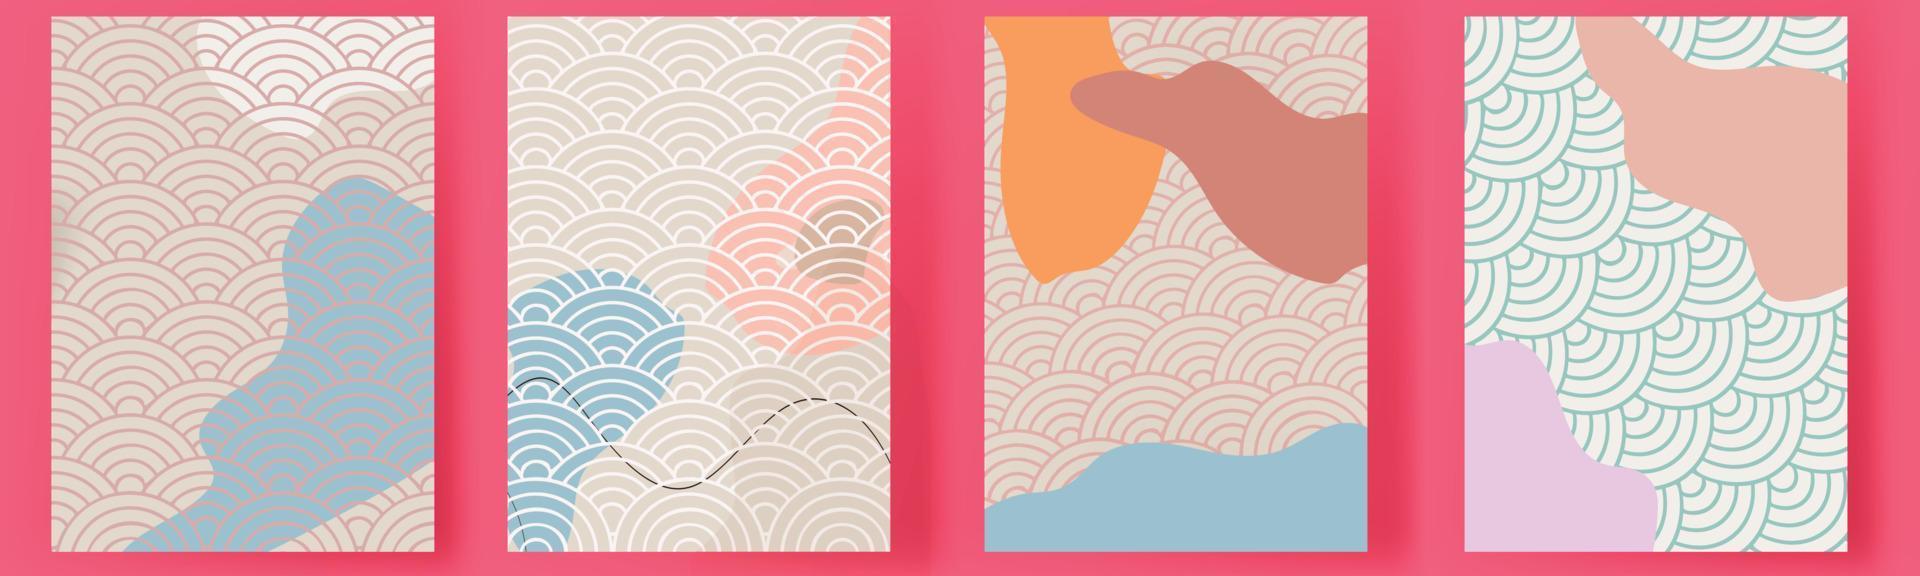 conjunto de vetores de arte minimalista moderno modelo japonês. fundo do cartão geométrico set.abstract capa design banner estilo brochura.